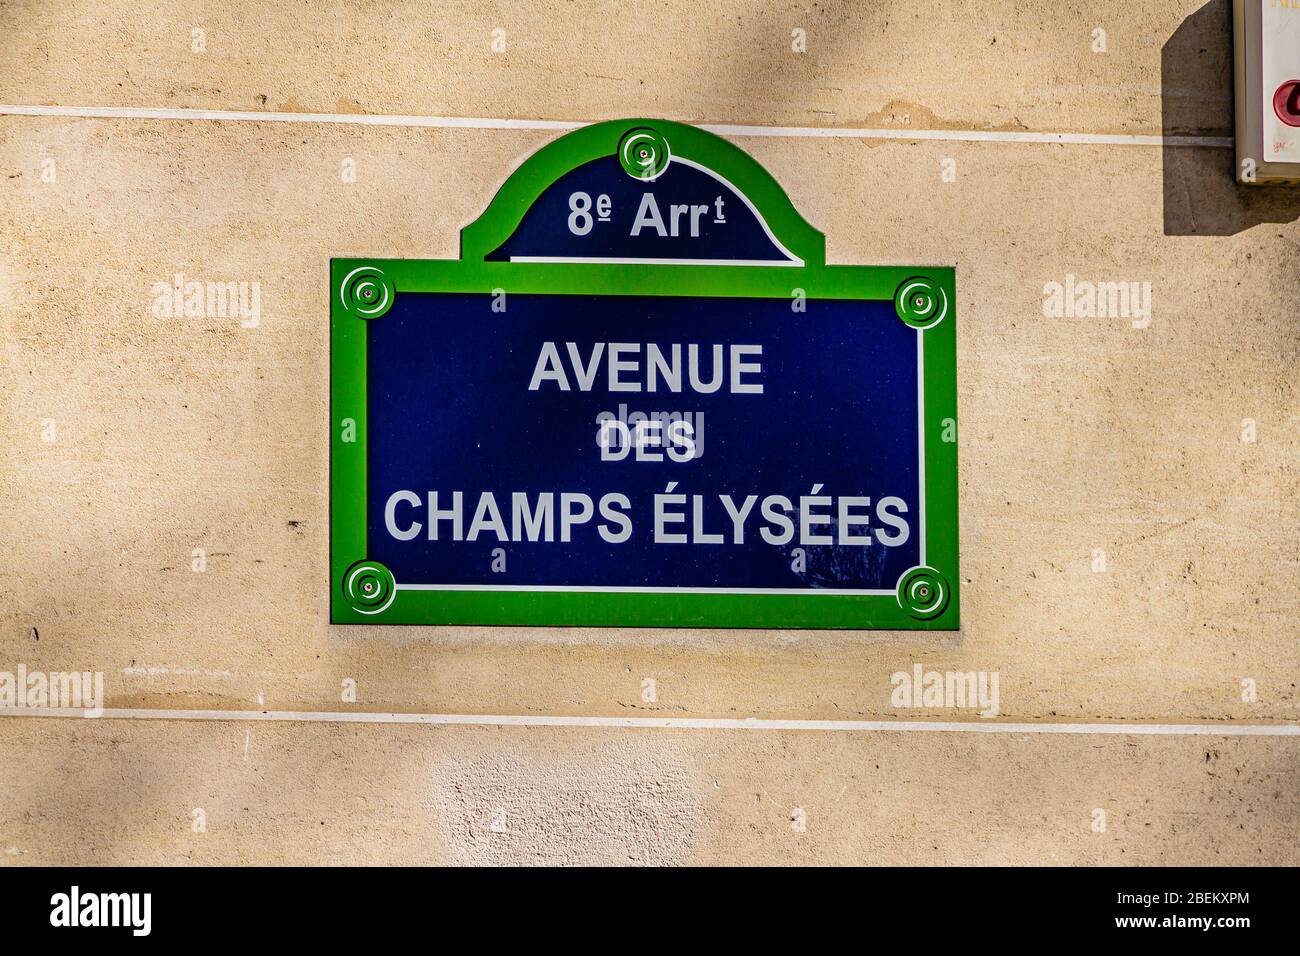 Street sign for the famous street the Avenue des Champs Élysées in the 8th arrondissement of Paris, France. February 2020. Stock Photo